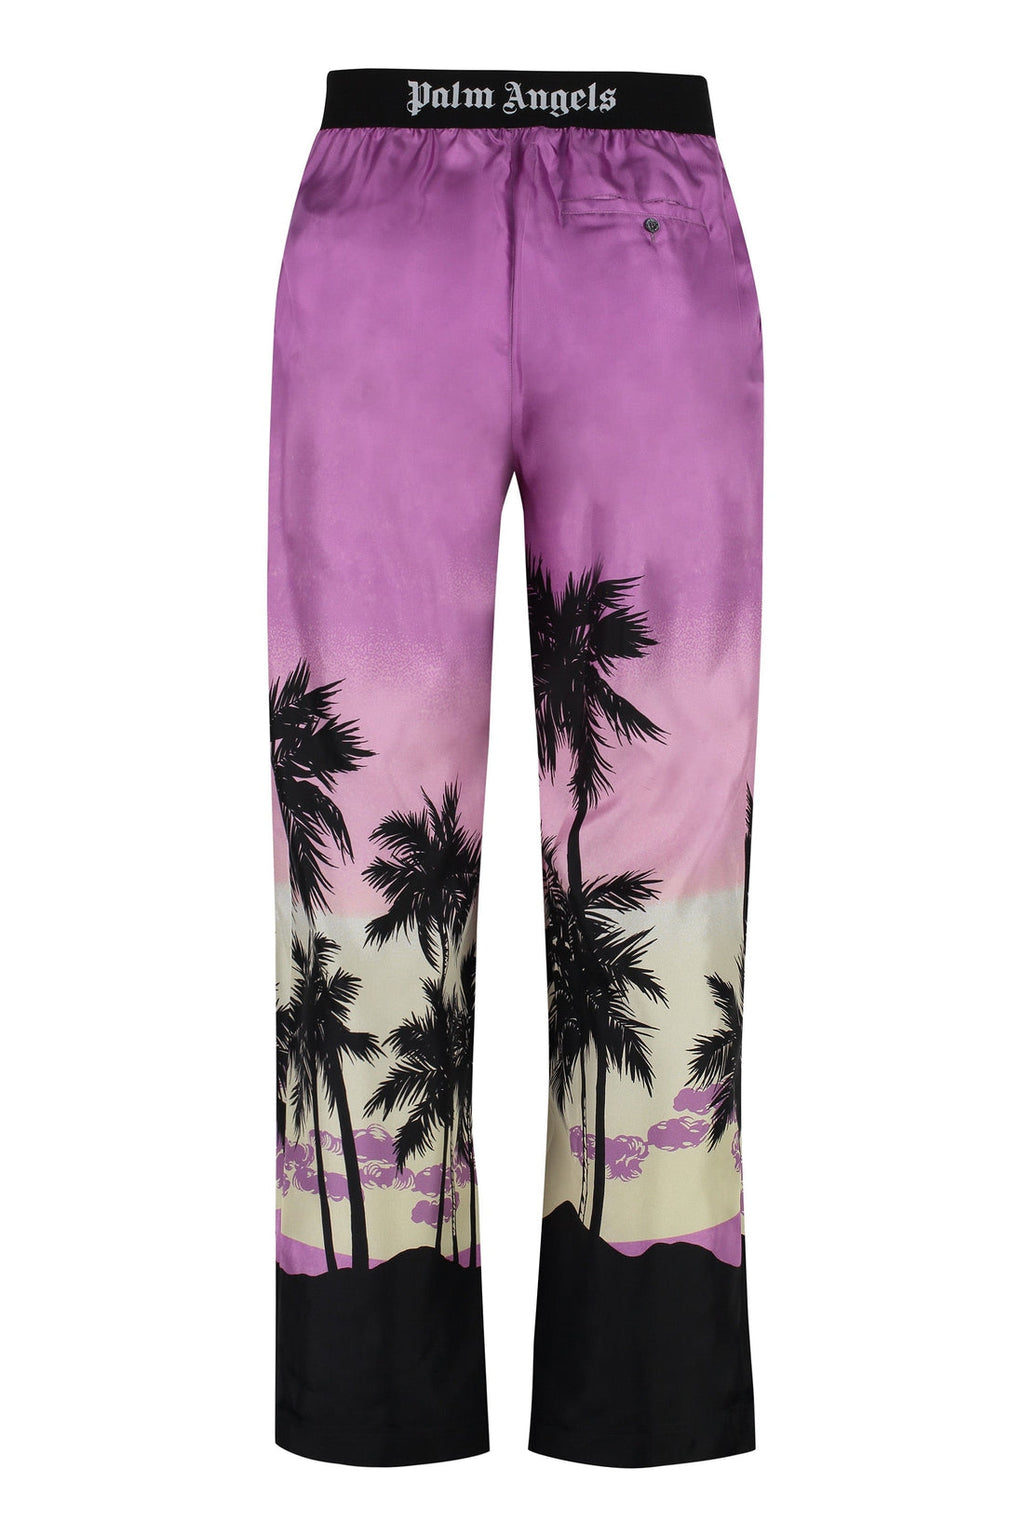 Palm Angels-OUTLET-SALE-Printed silk pants-ARCHIVIST